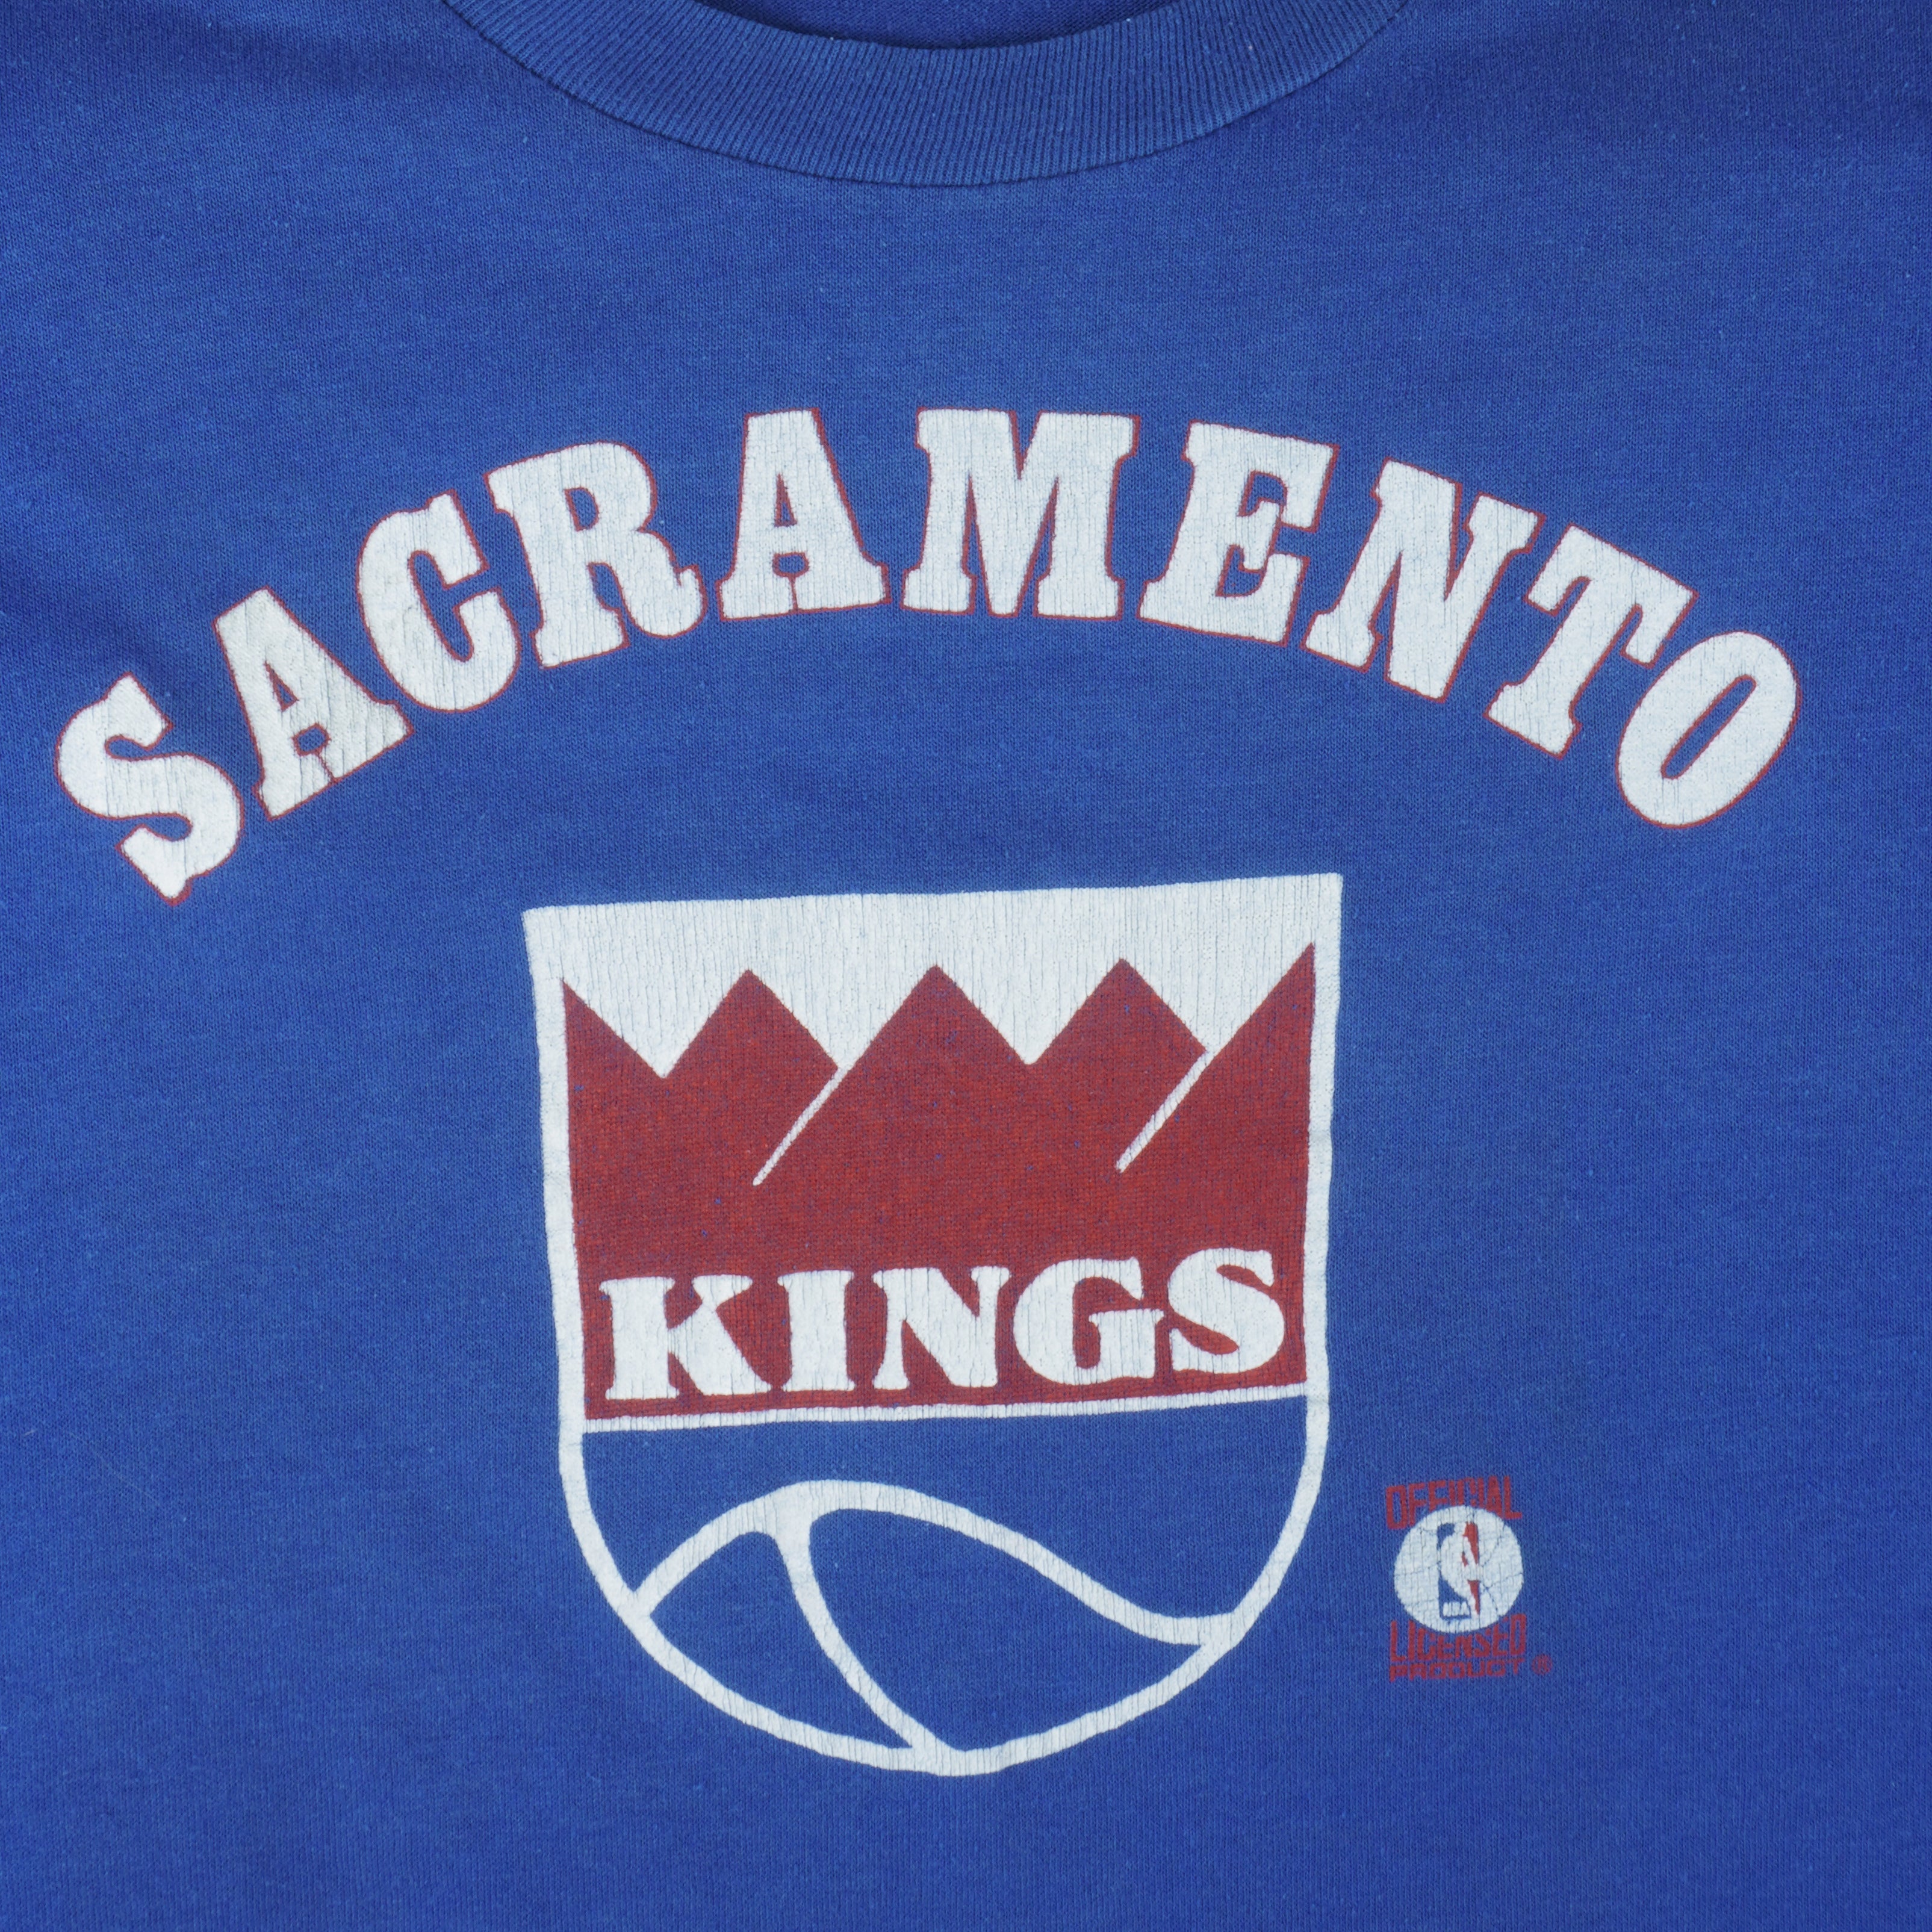 SACRAMENTO KINGS Shirt 80's Vintage/ NBA Basketball Super